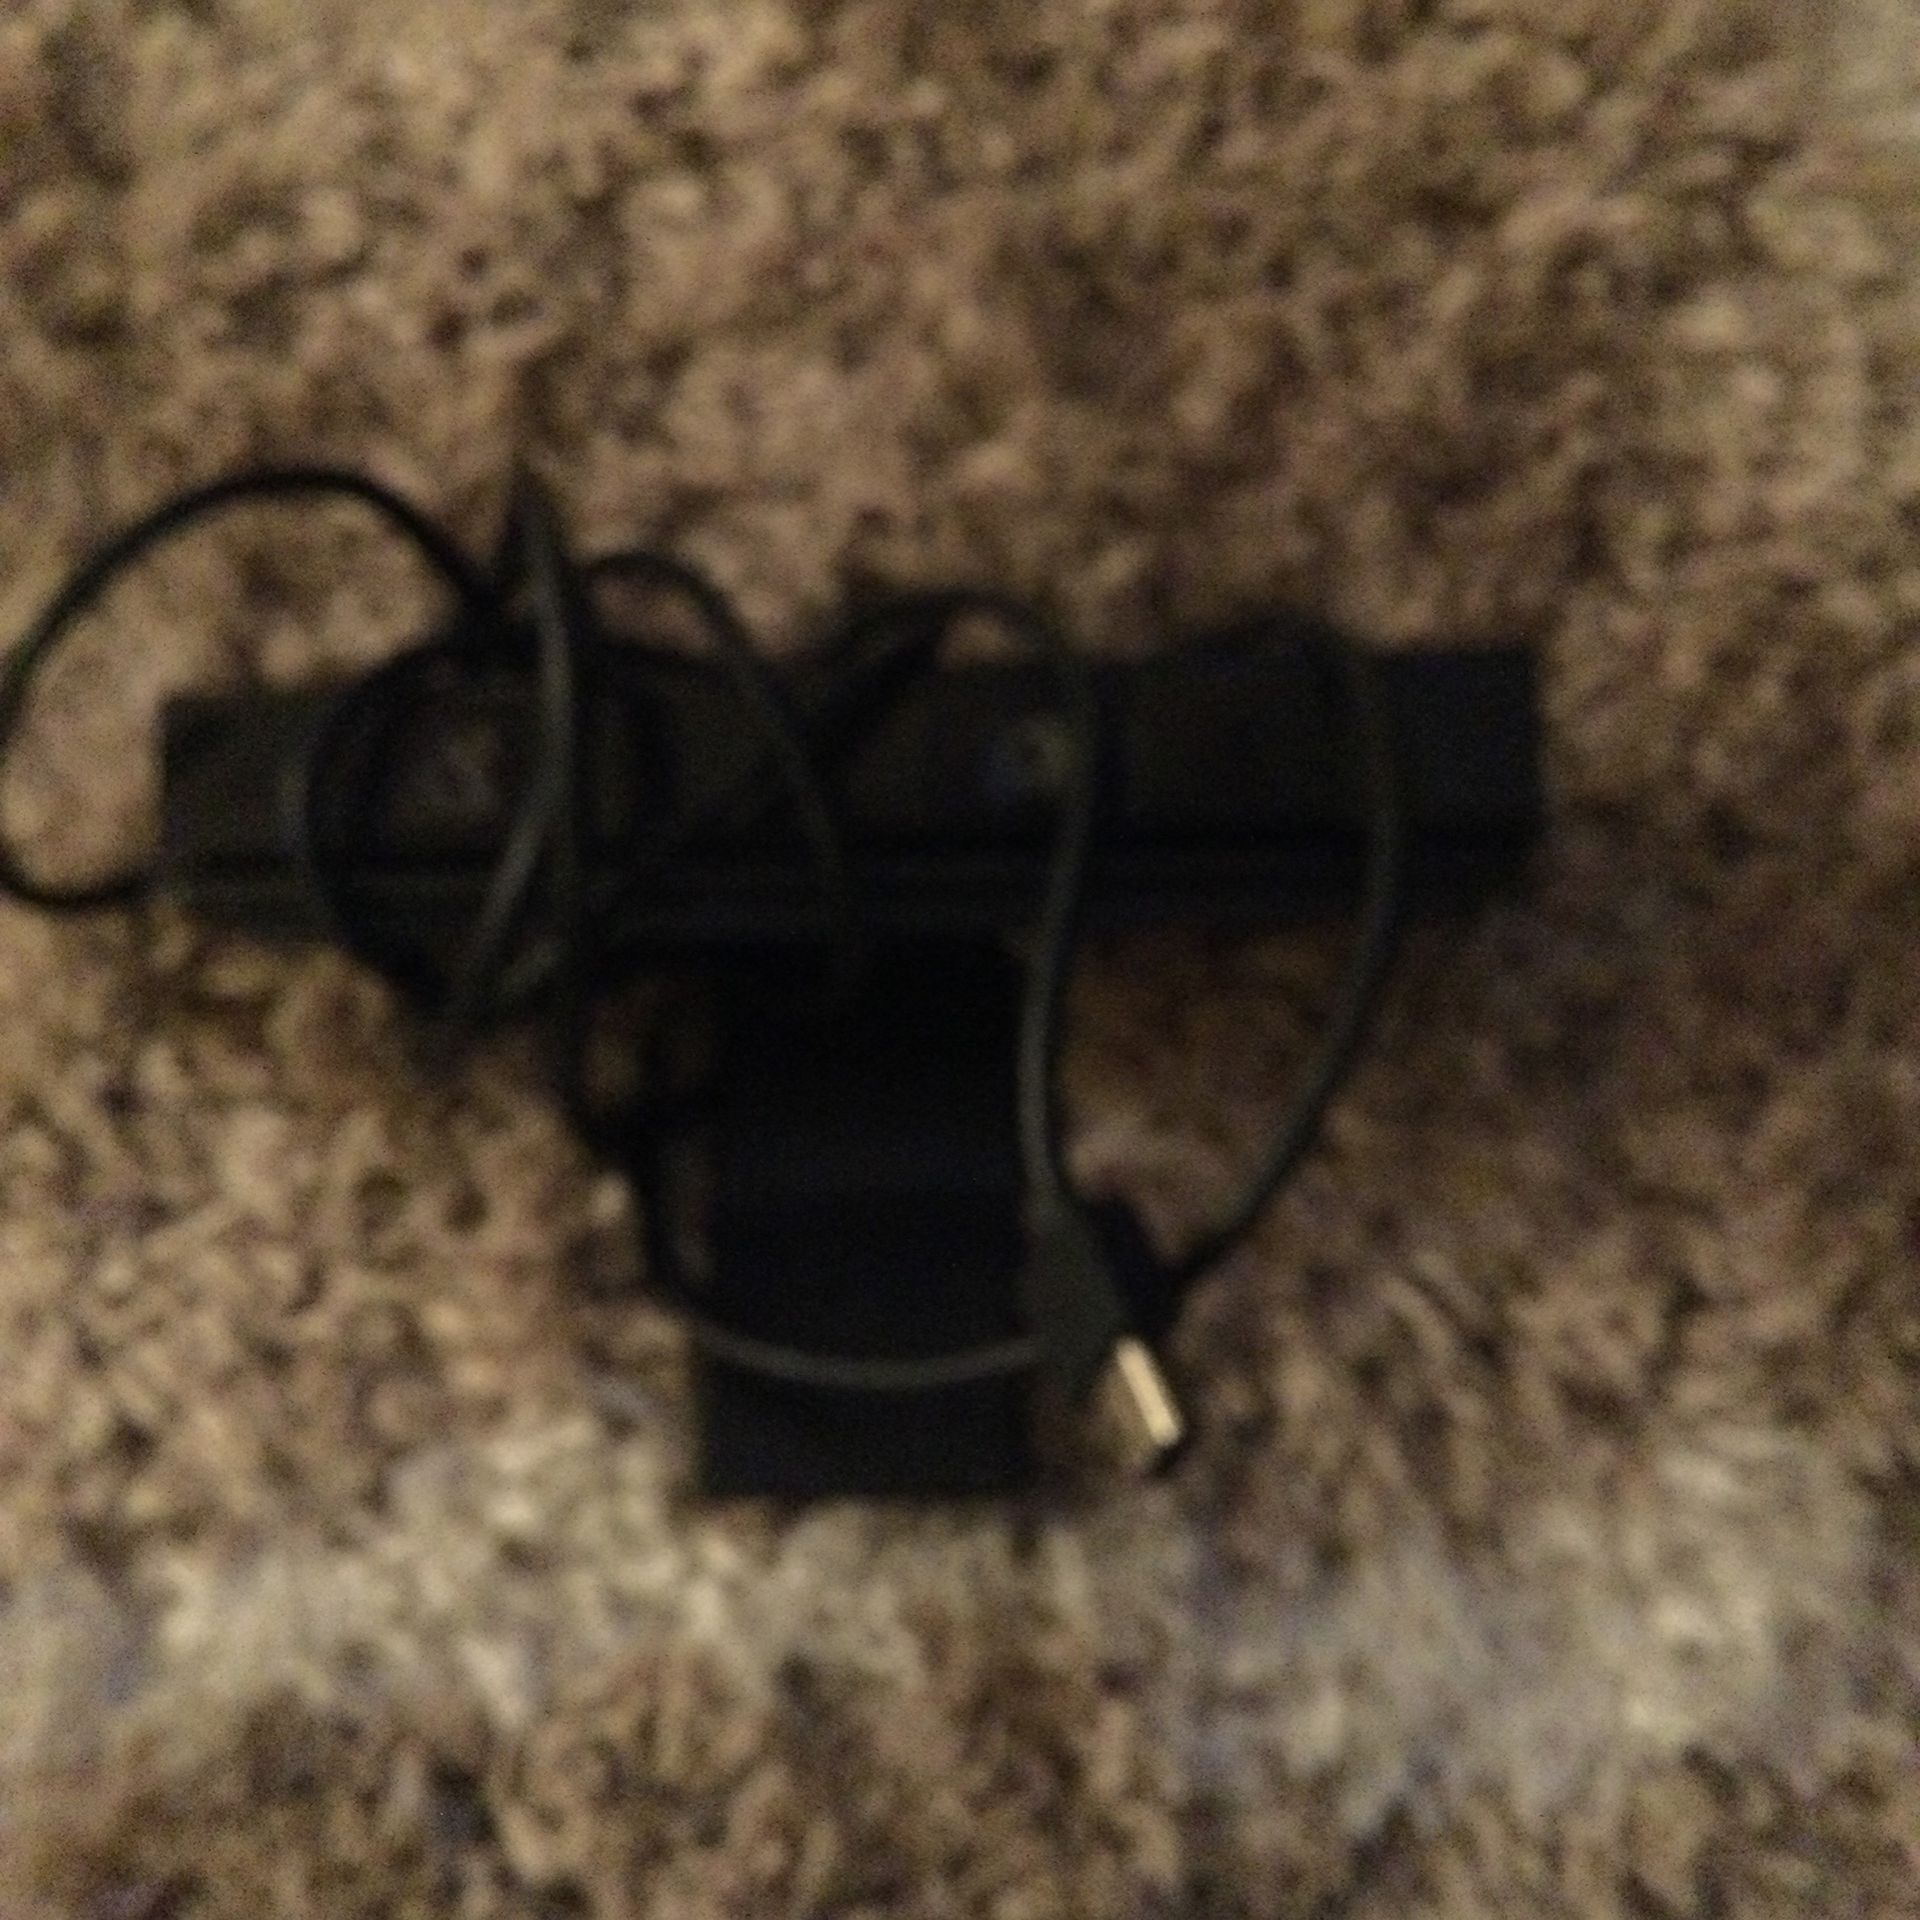 PS4 Camera